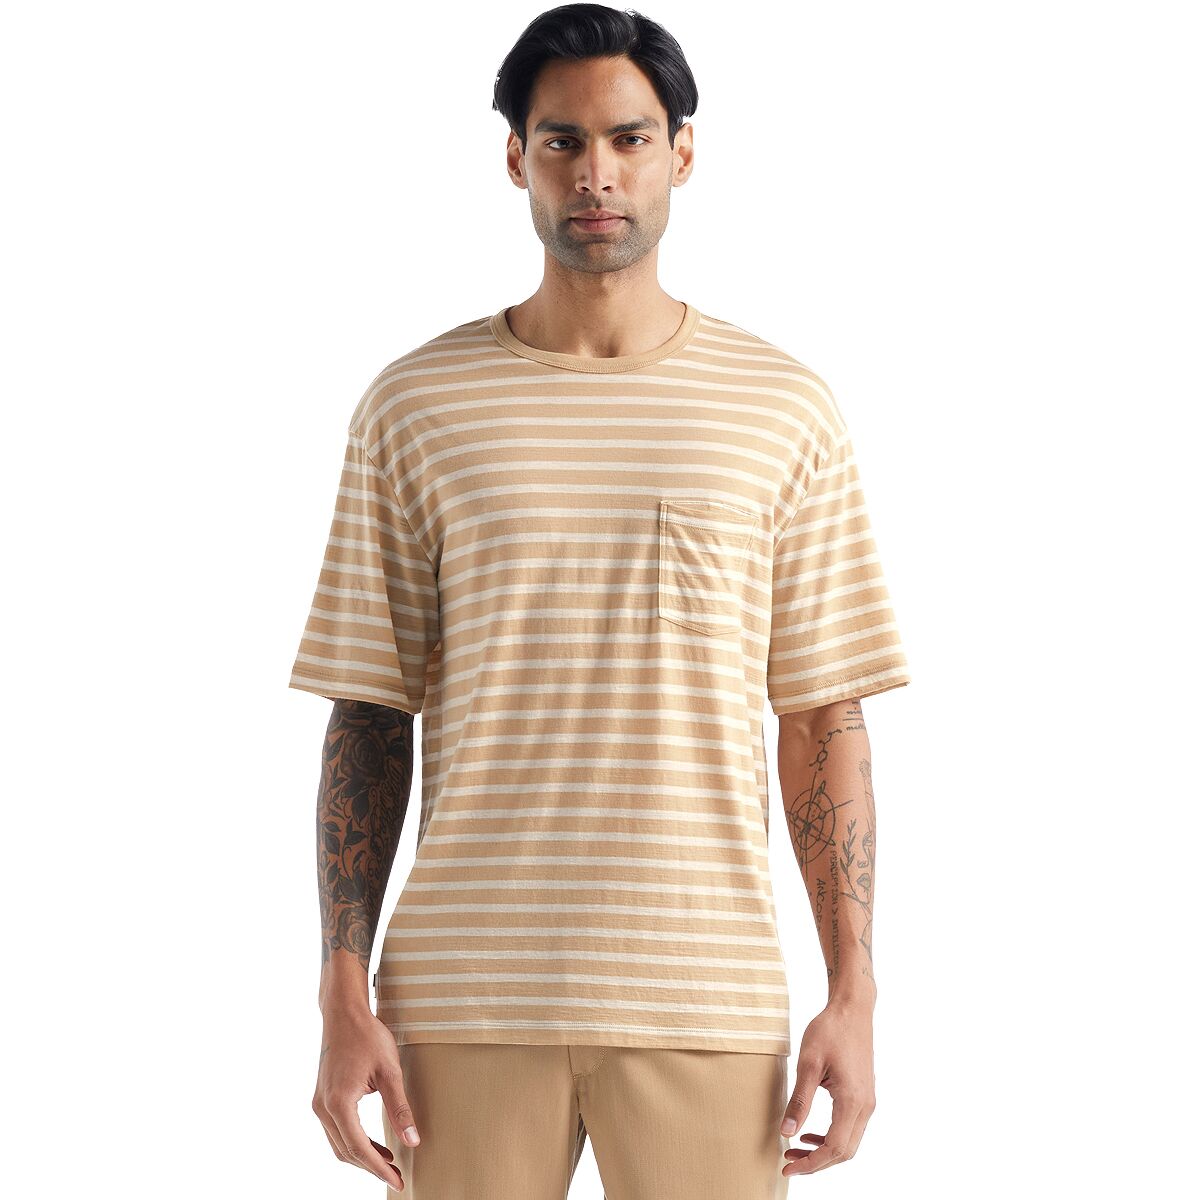 Icebreaker Granary Stripe Short-Sleeve Pocket T-Shirt - Men's product image